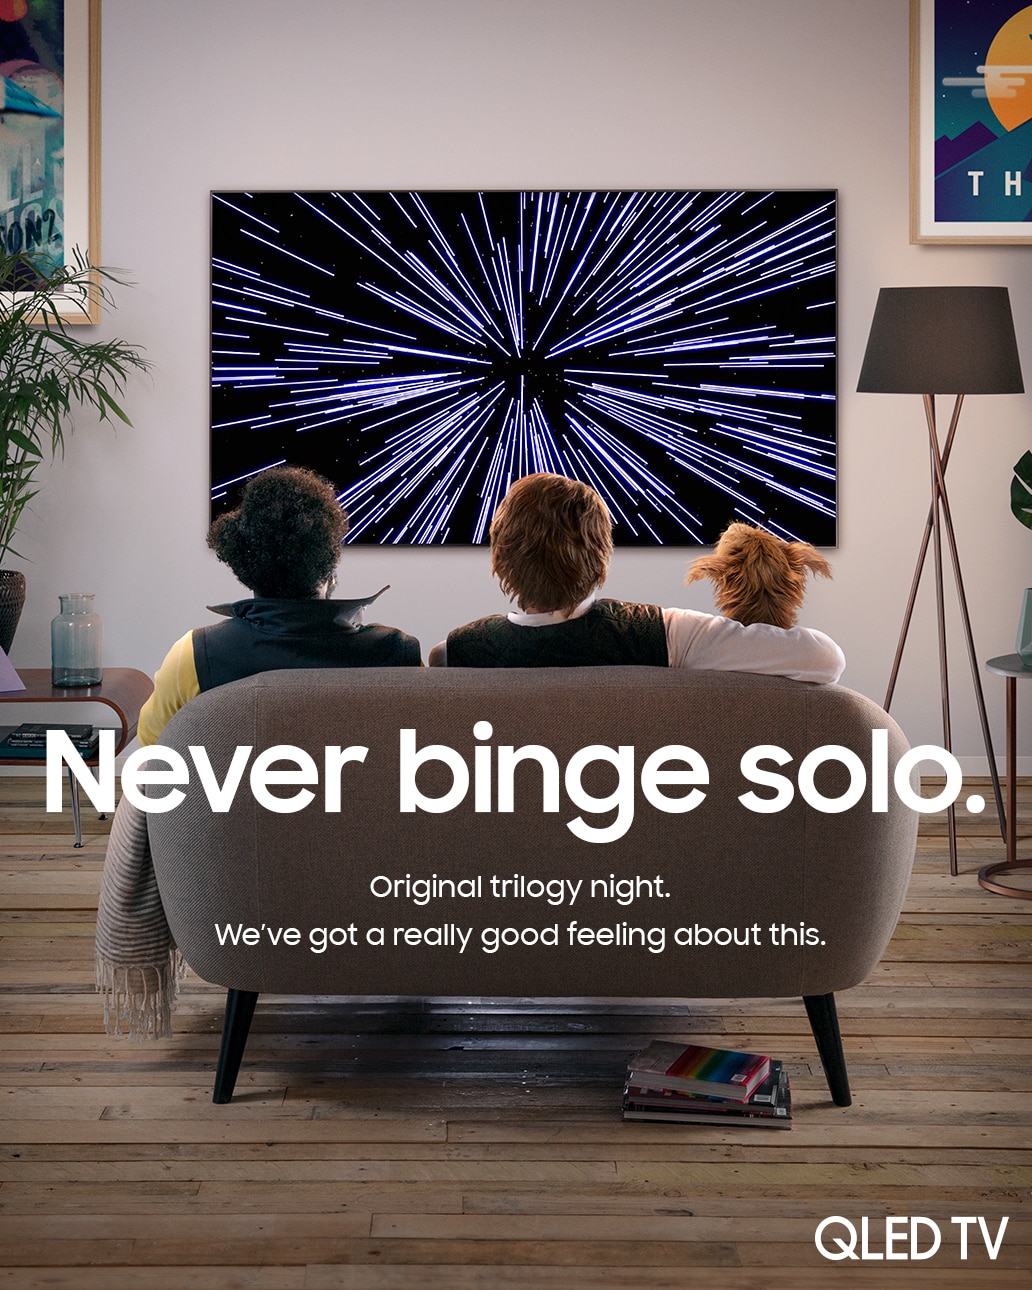 Never Binge Solo Samsung Star Wars QLED advert